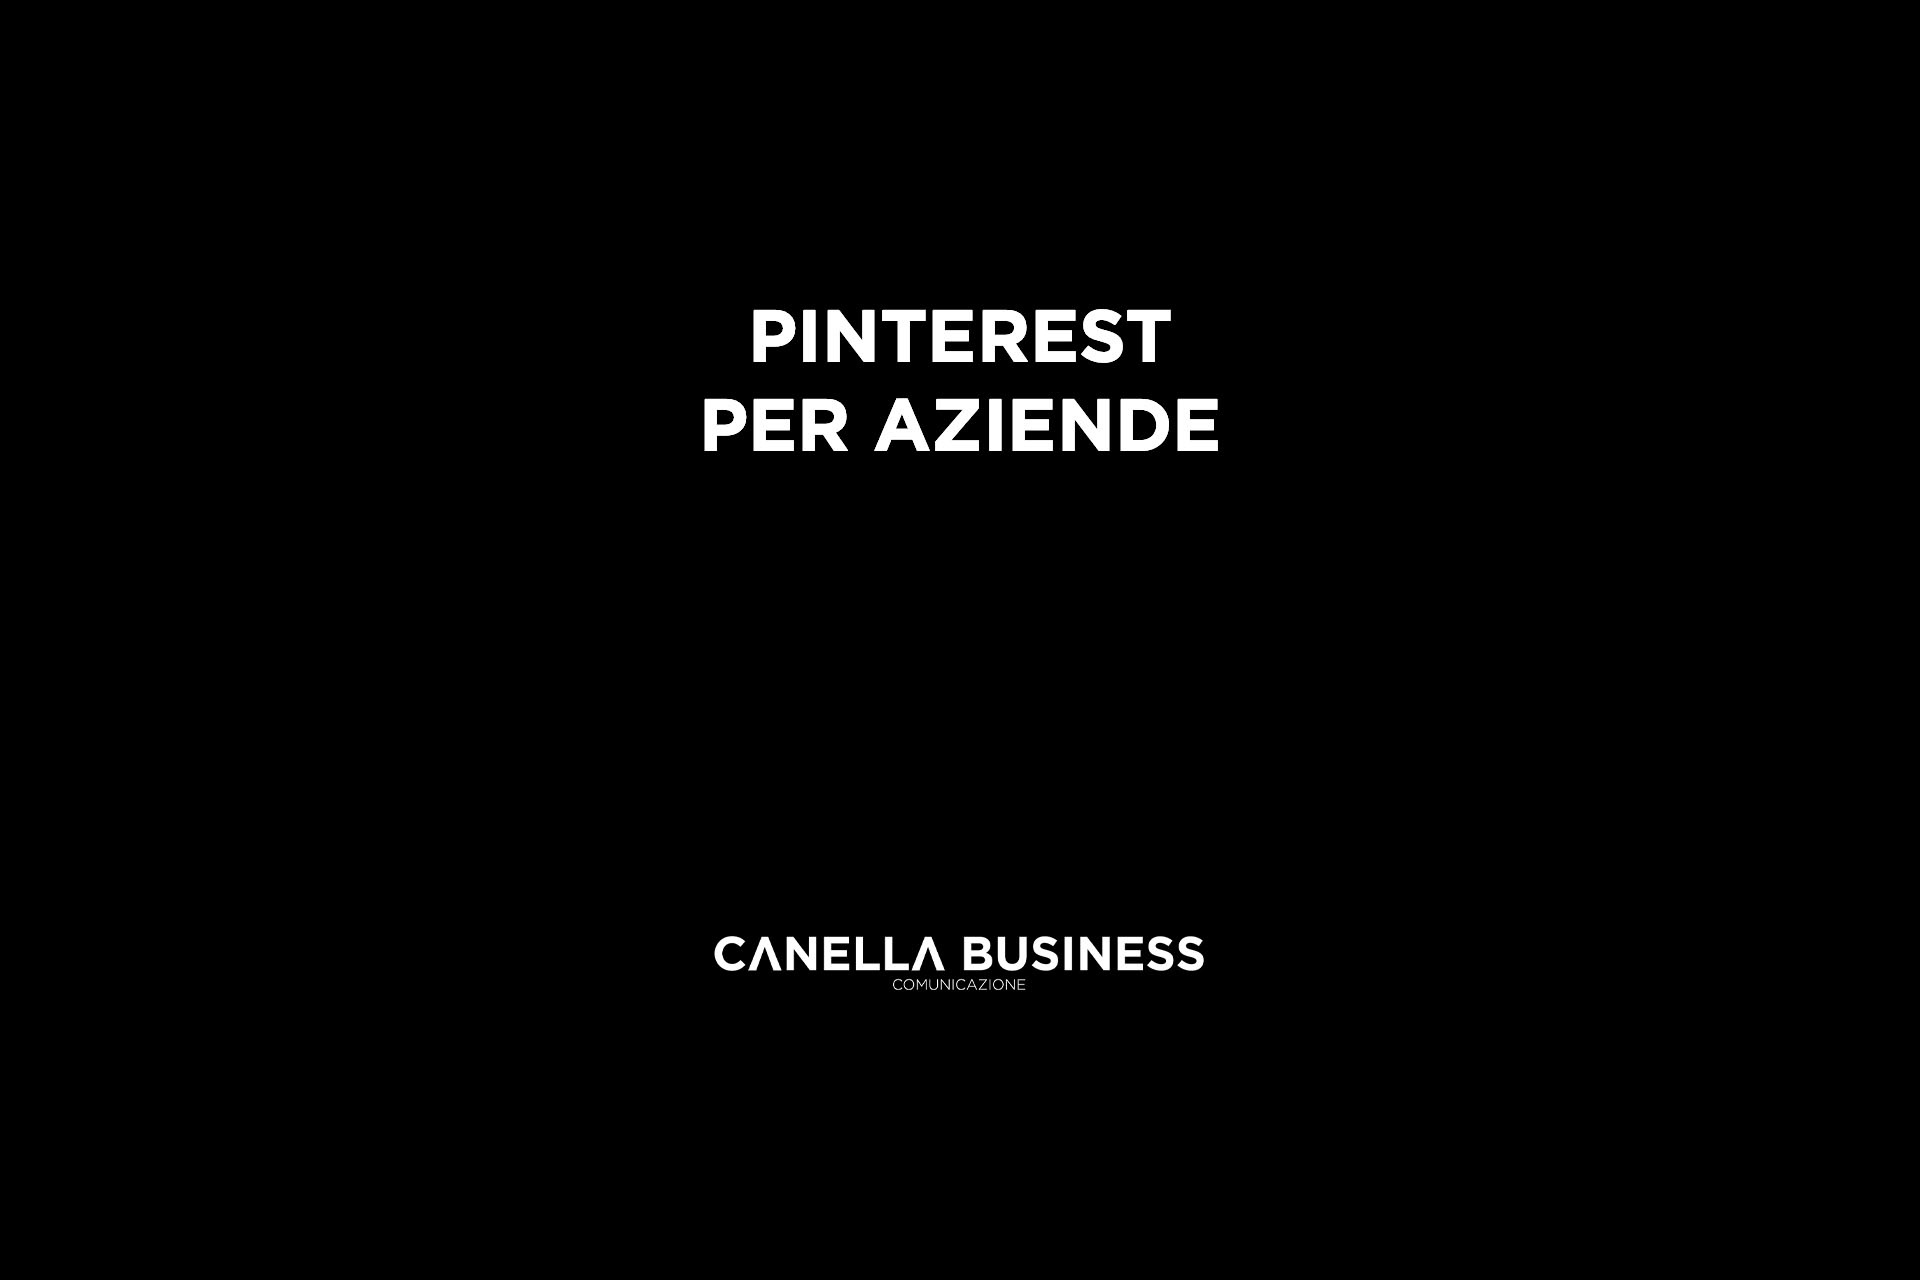 Pinterest per aziende